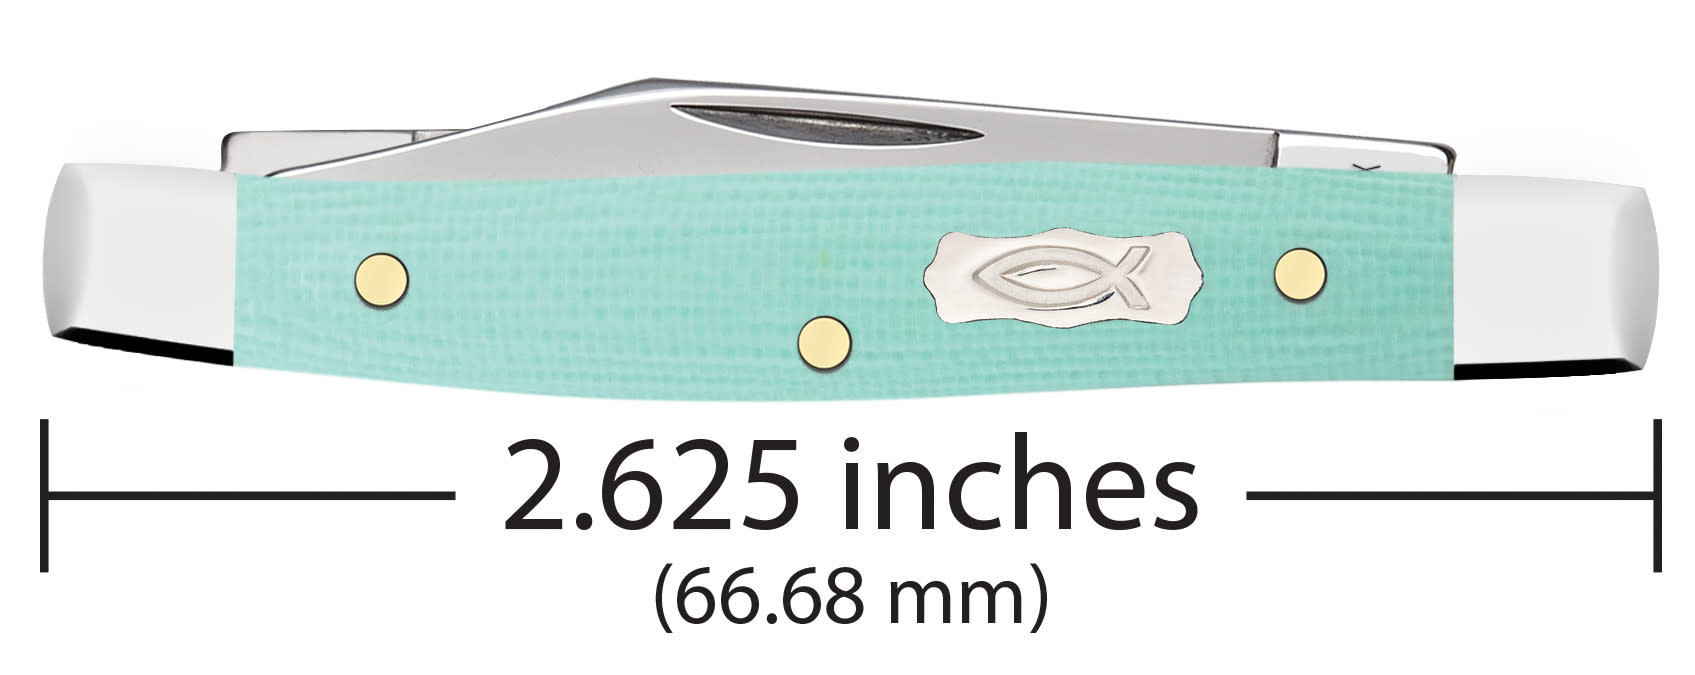 Smooth Seafoam Green G-10 Small Pen Dimensions